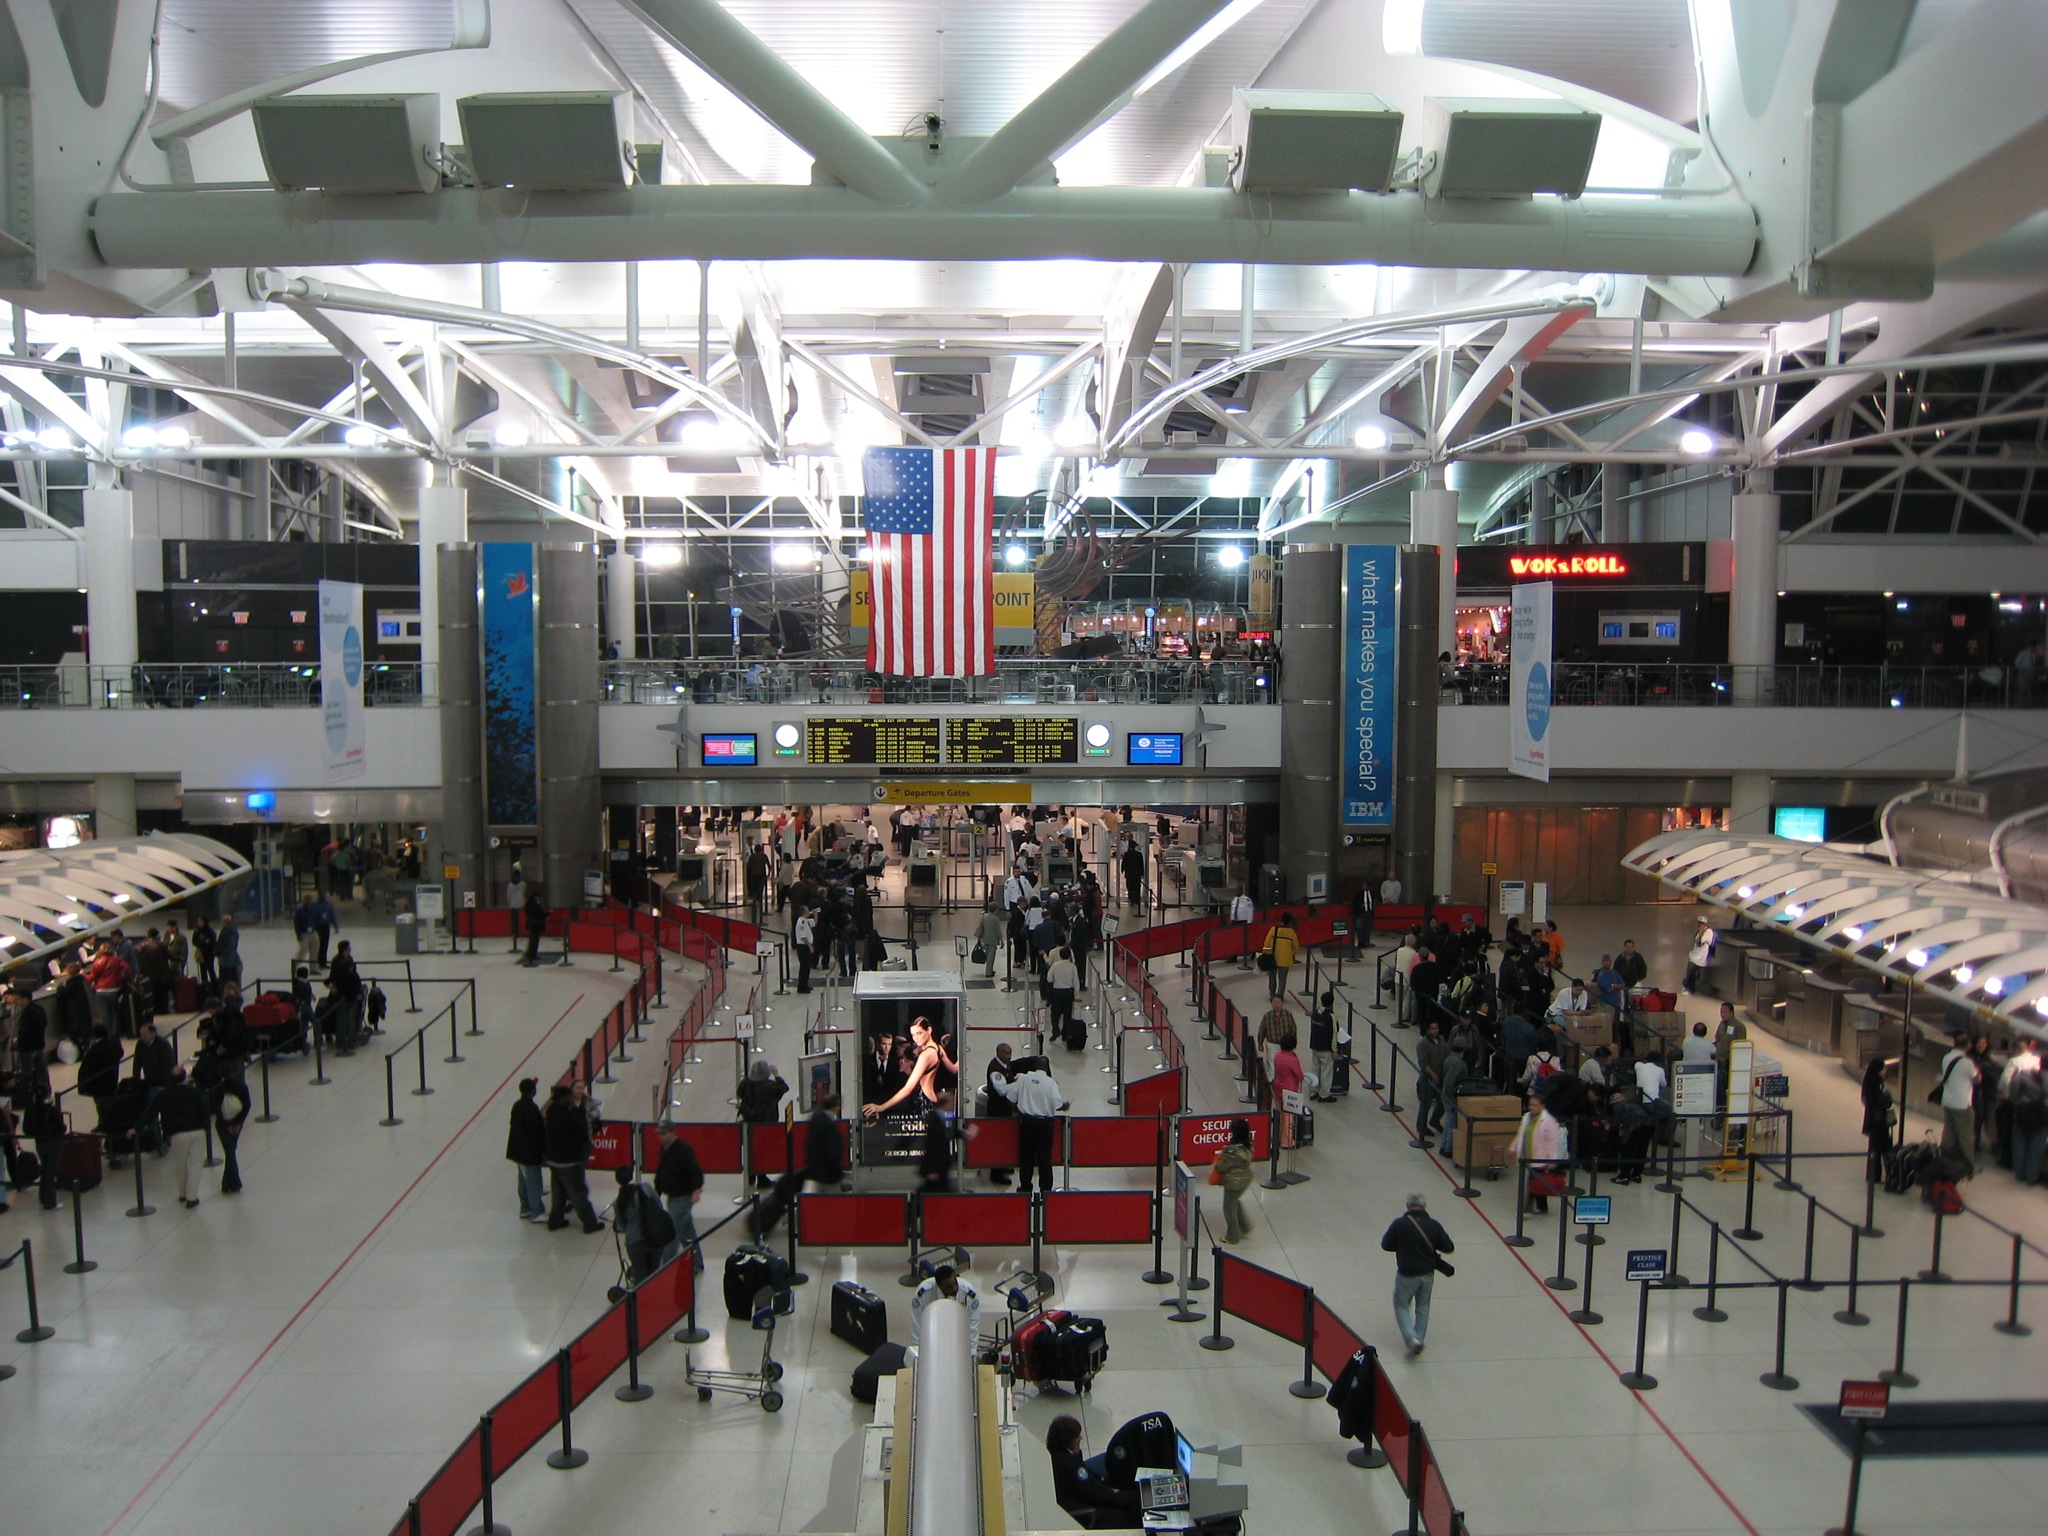 File:JFK Terminal 1.jpg - Wikipedia, the free encyclopedia